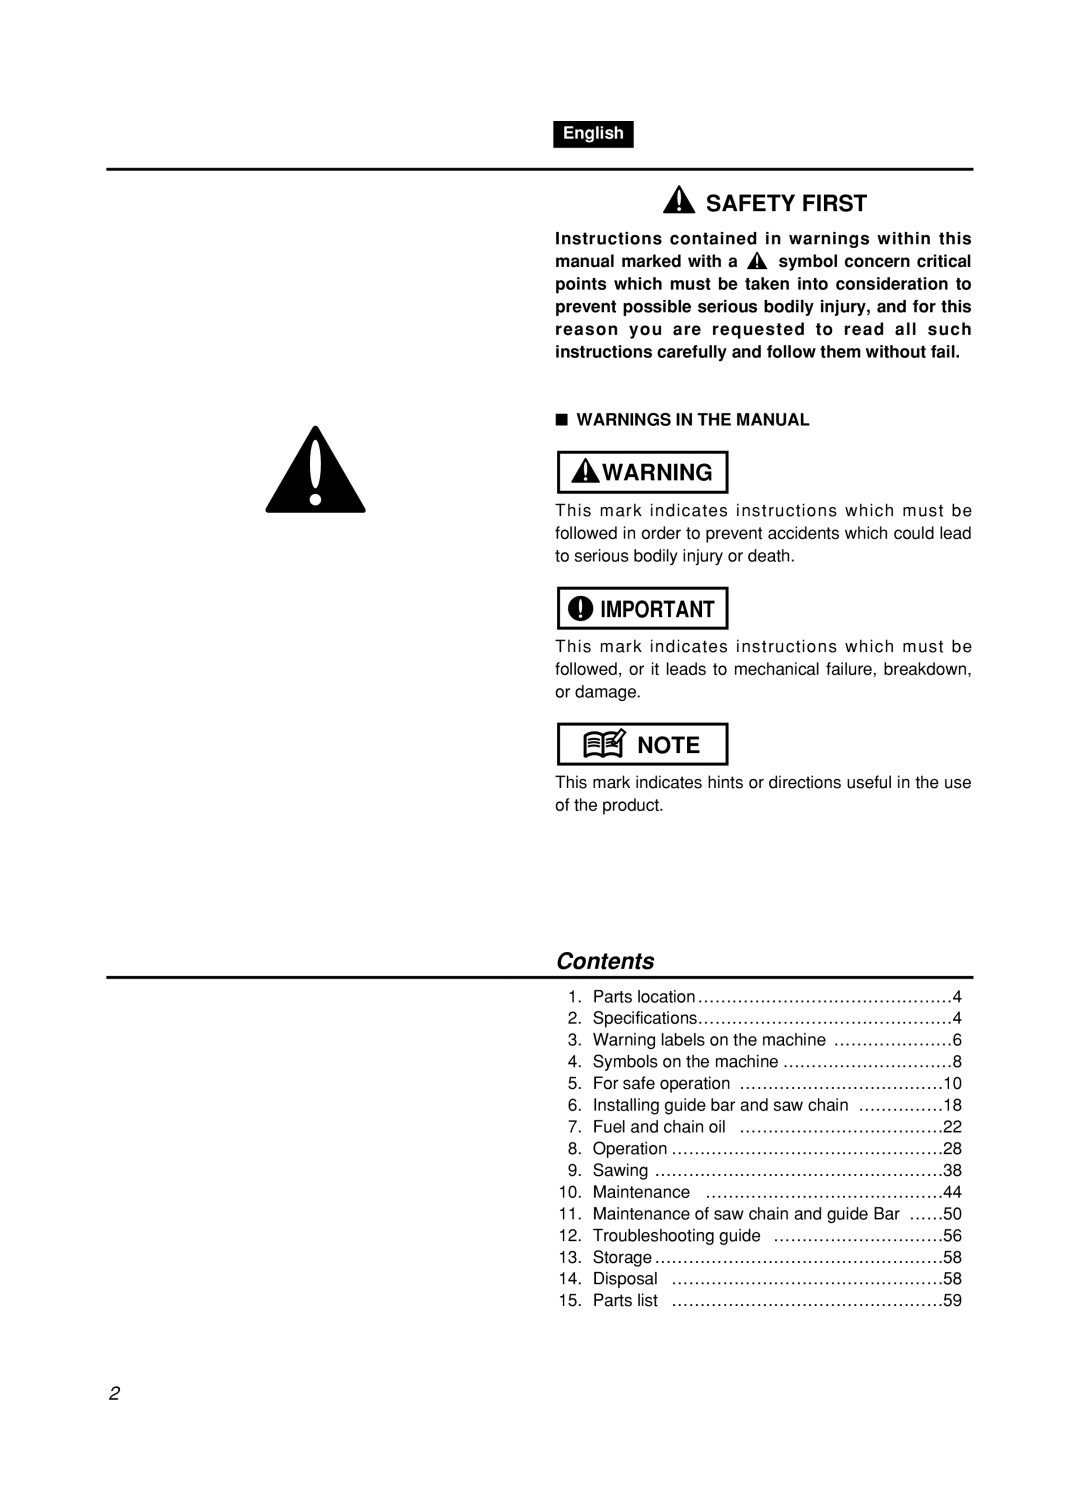 Zenoah GZ400 manual Safety First, Contents, English 